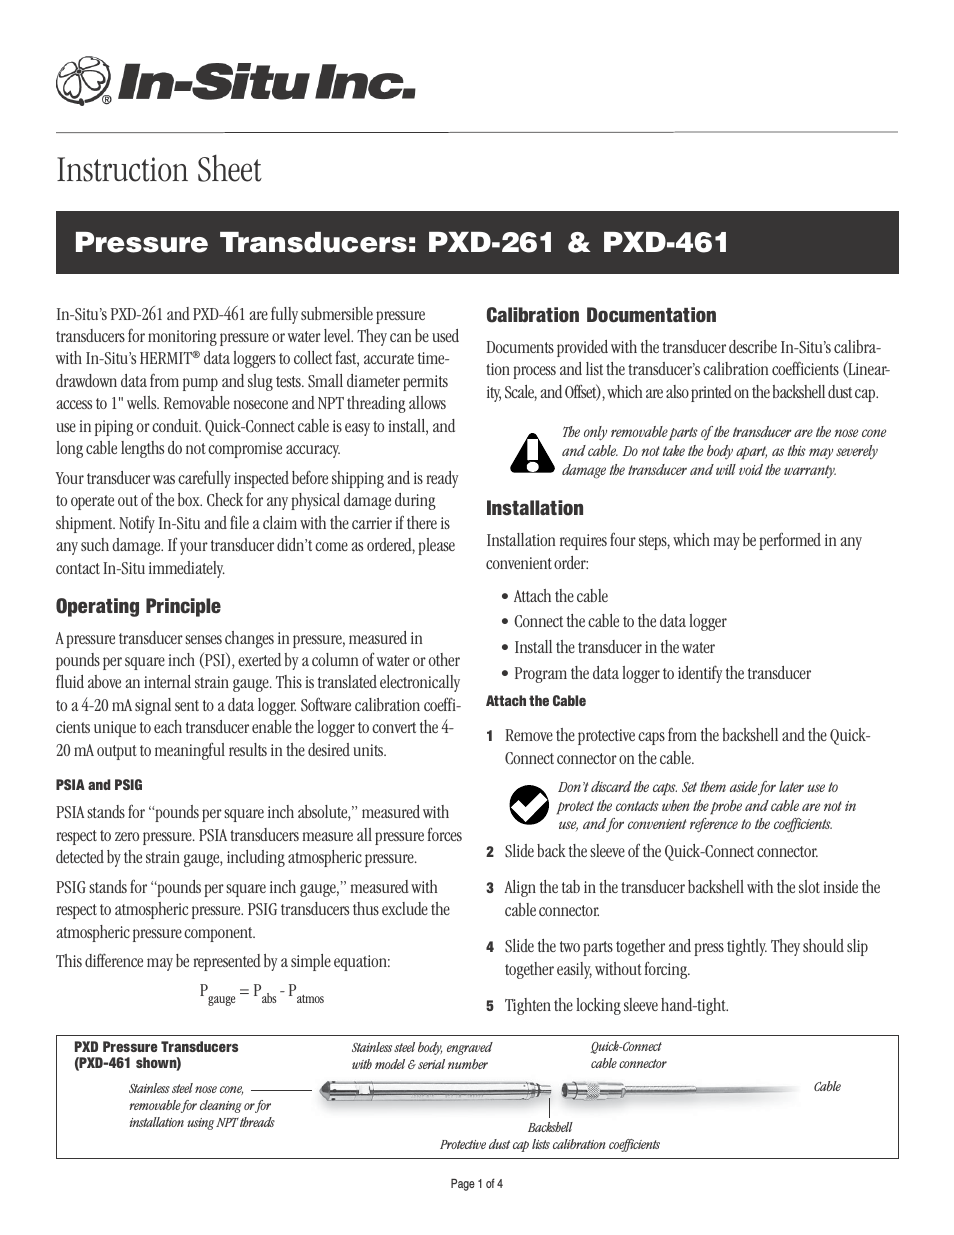 PXD-261 Operators Manual